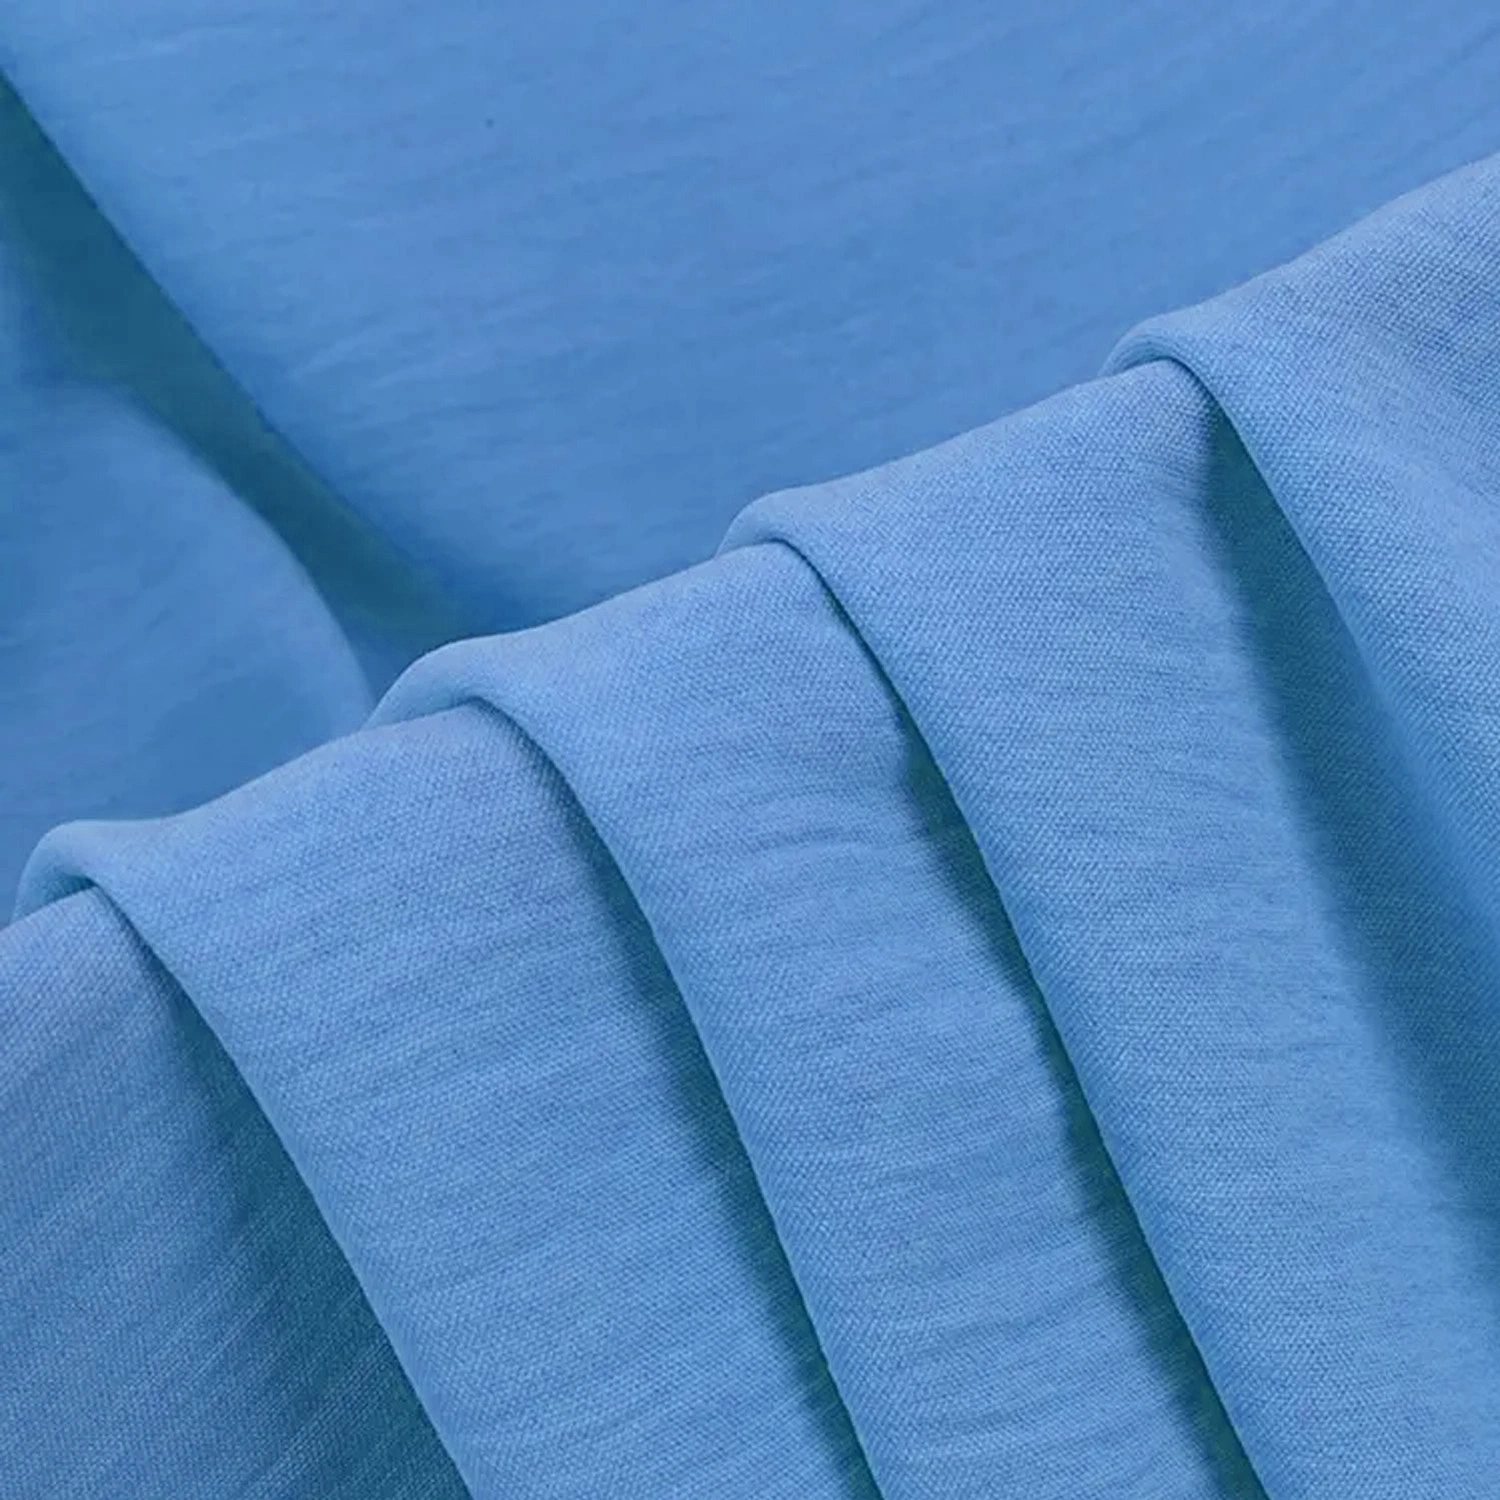 180d Dubai Abaya Chiffon Airflow Crepe Cey Fabric 100% Polyester